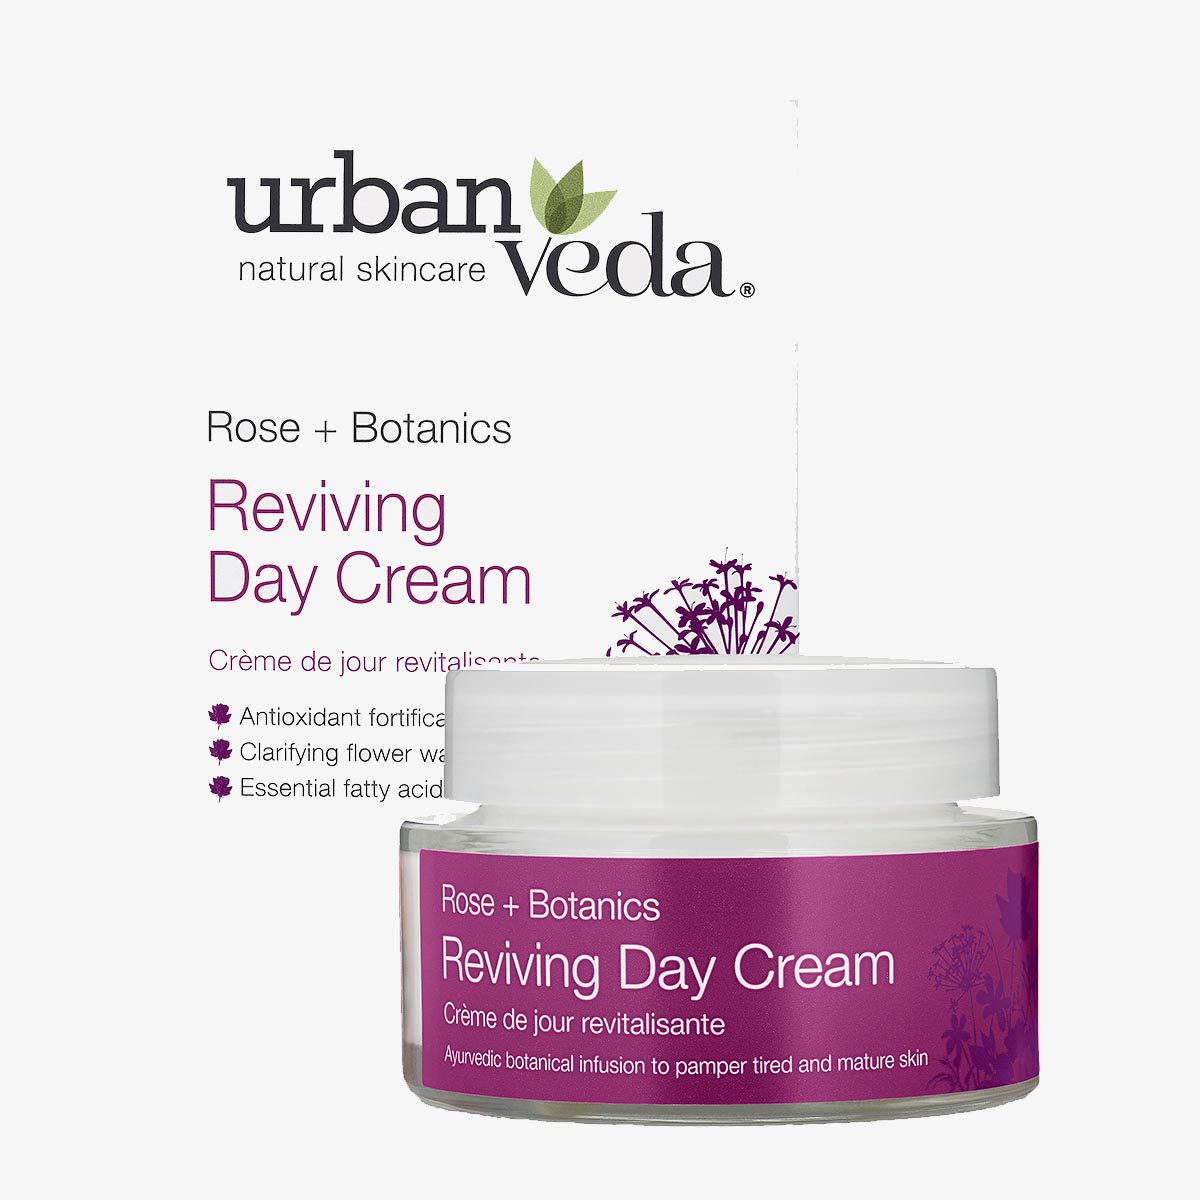 Reviving Day Cream